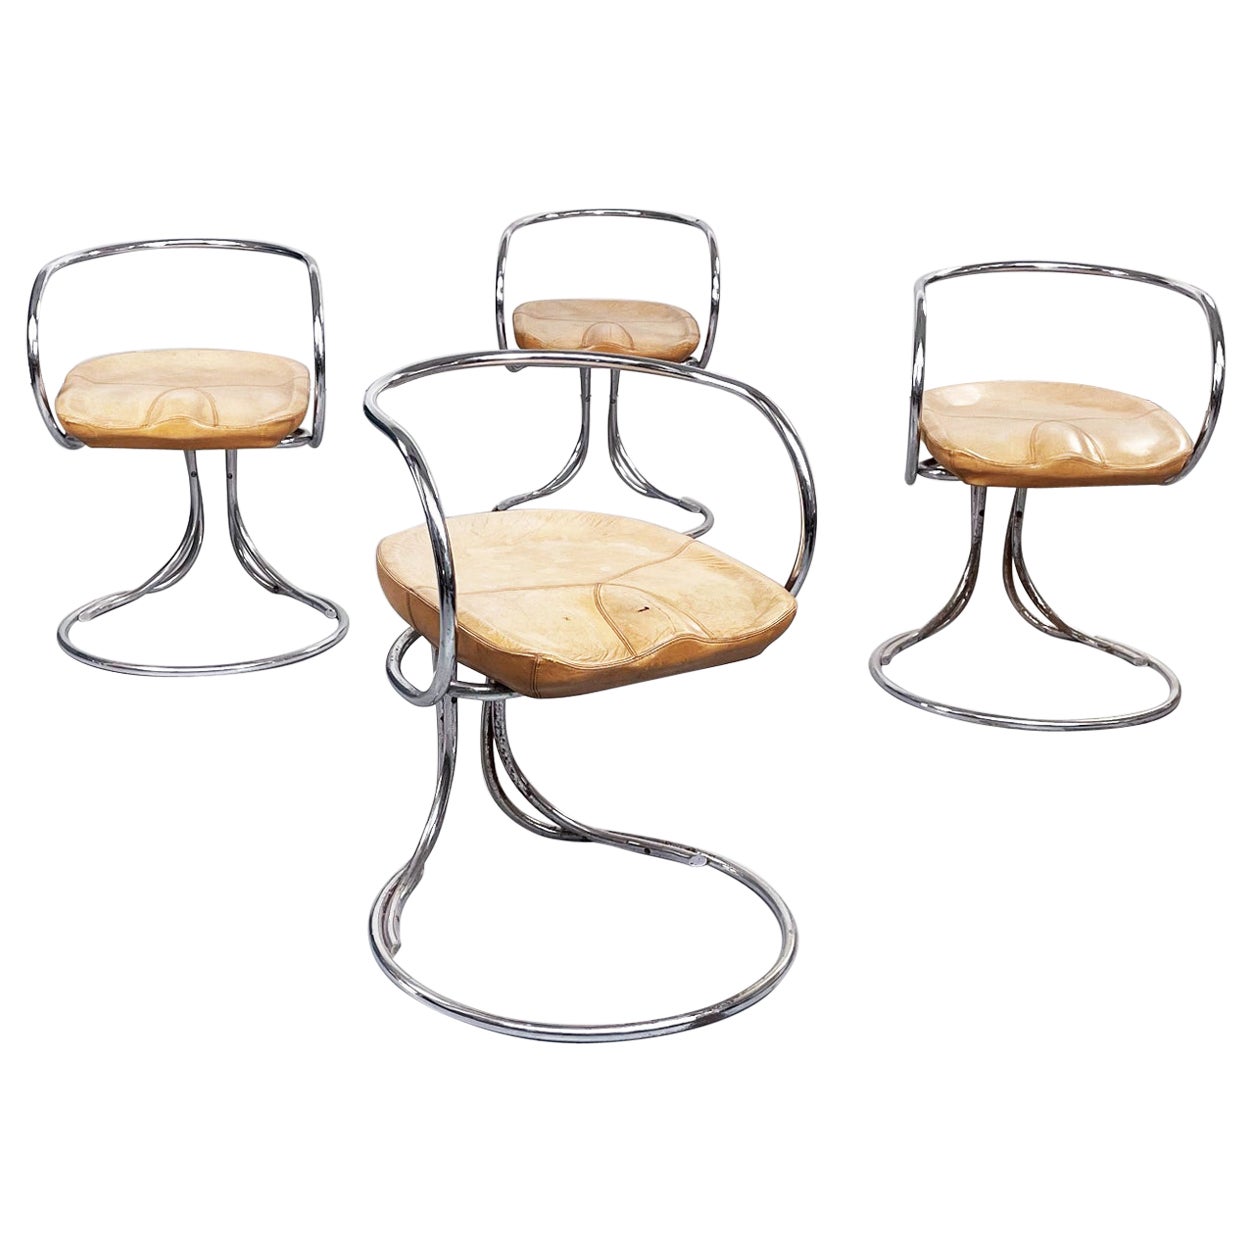 Italian MidCentury Brown Leather Steel Chairs by Tatlin Nikol International 1950 For Sale